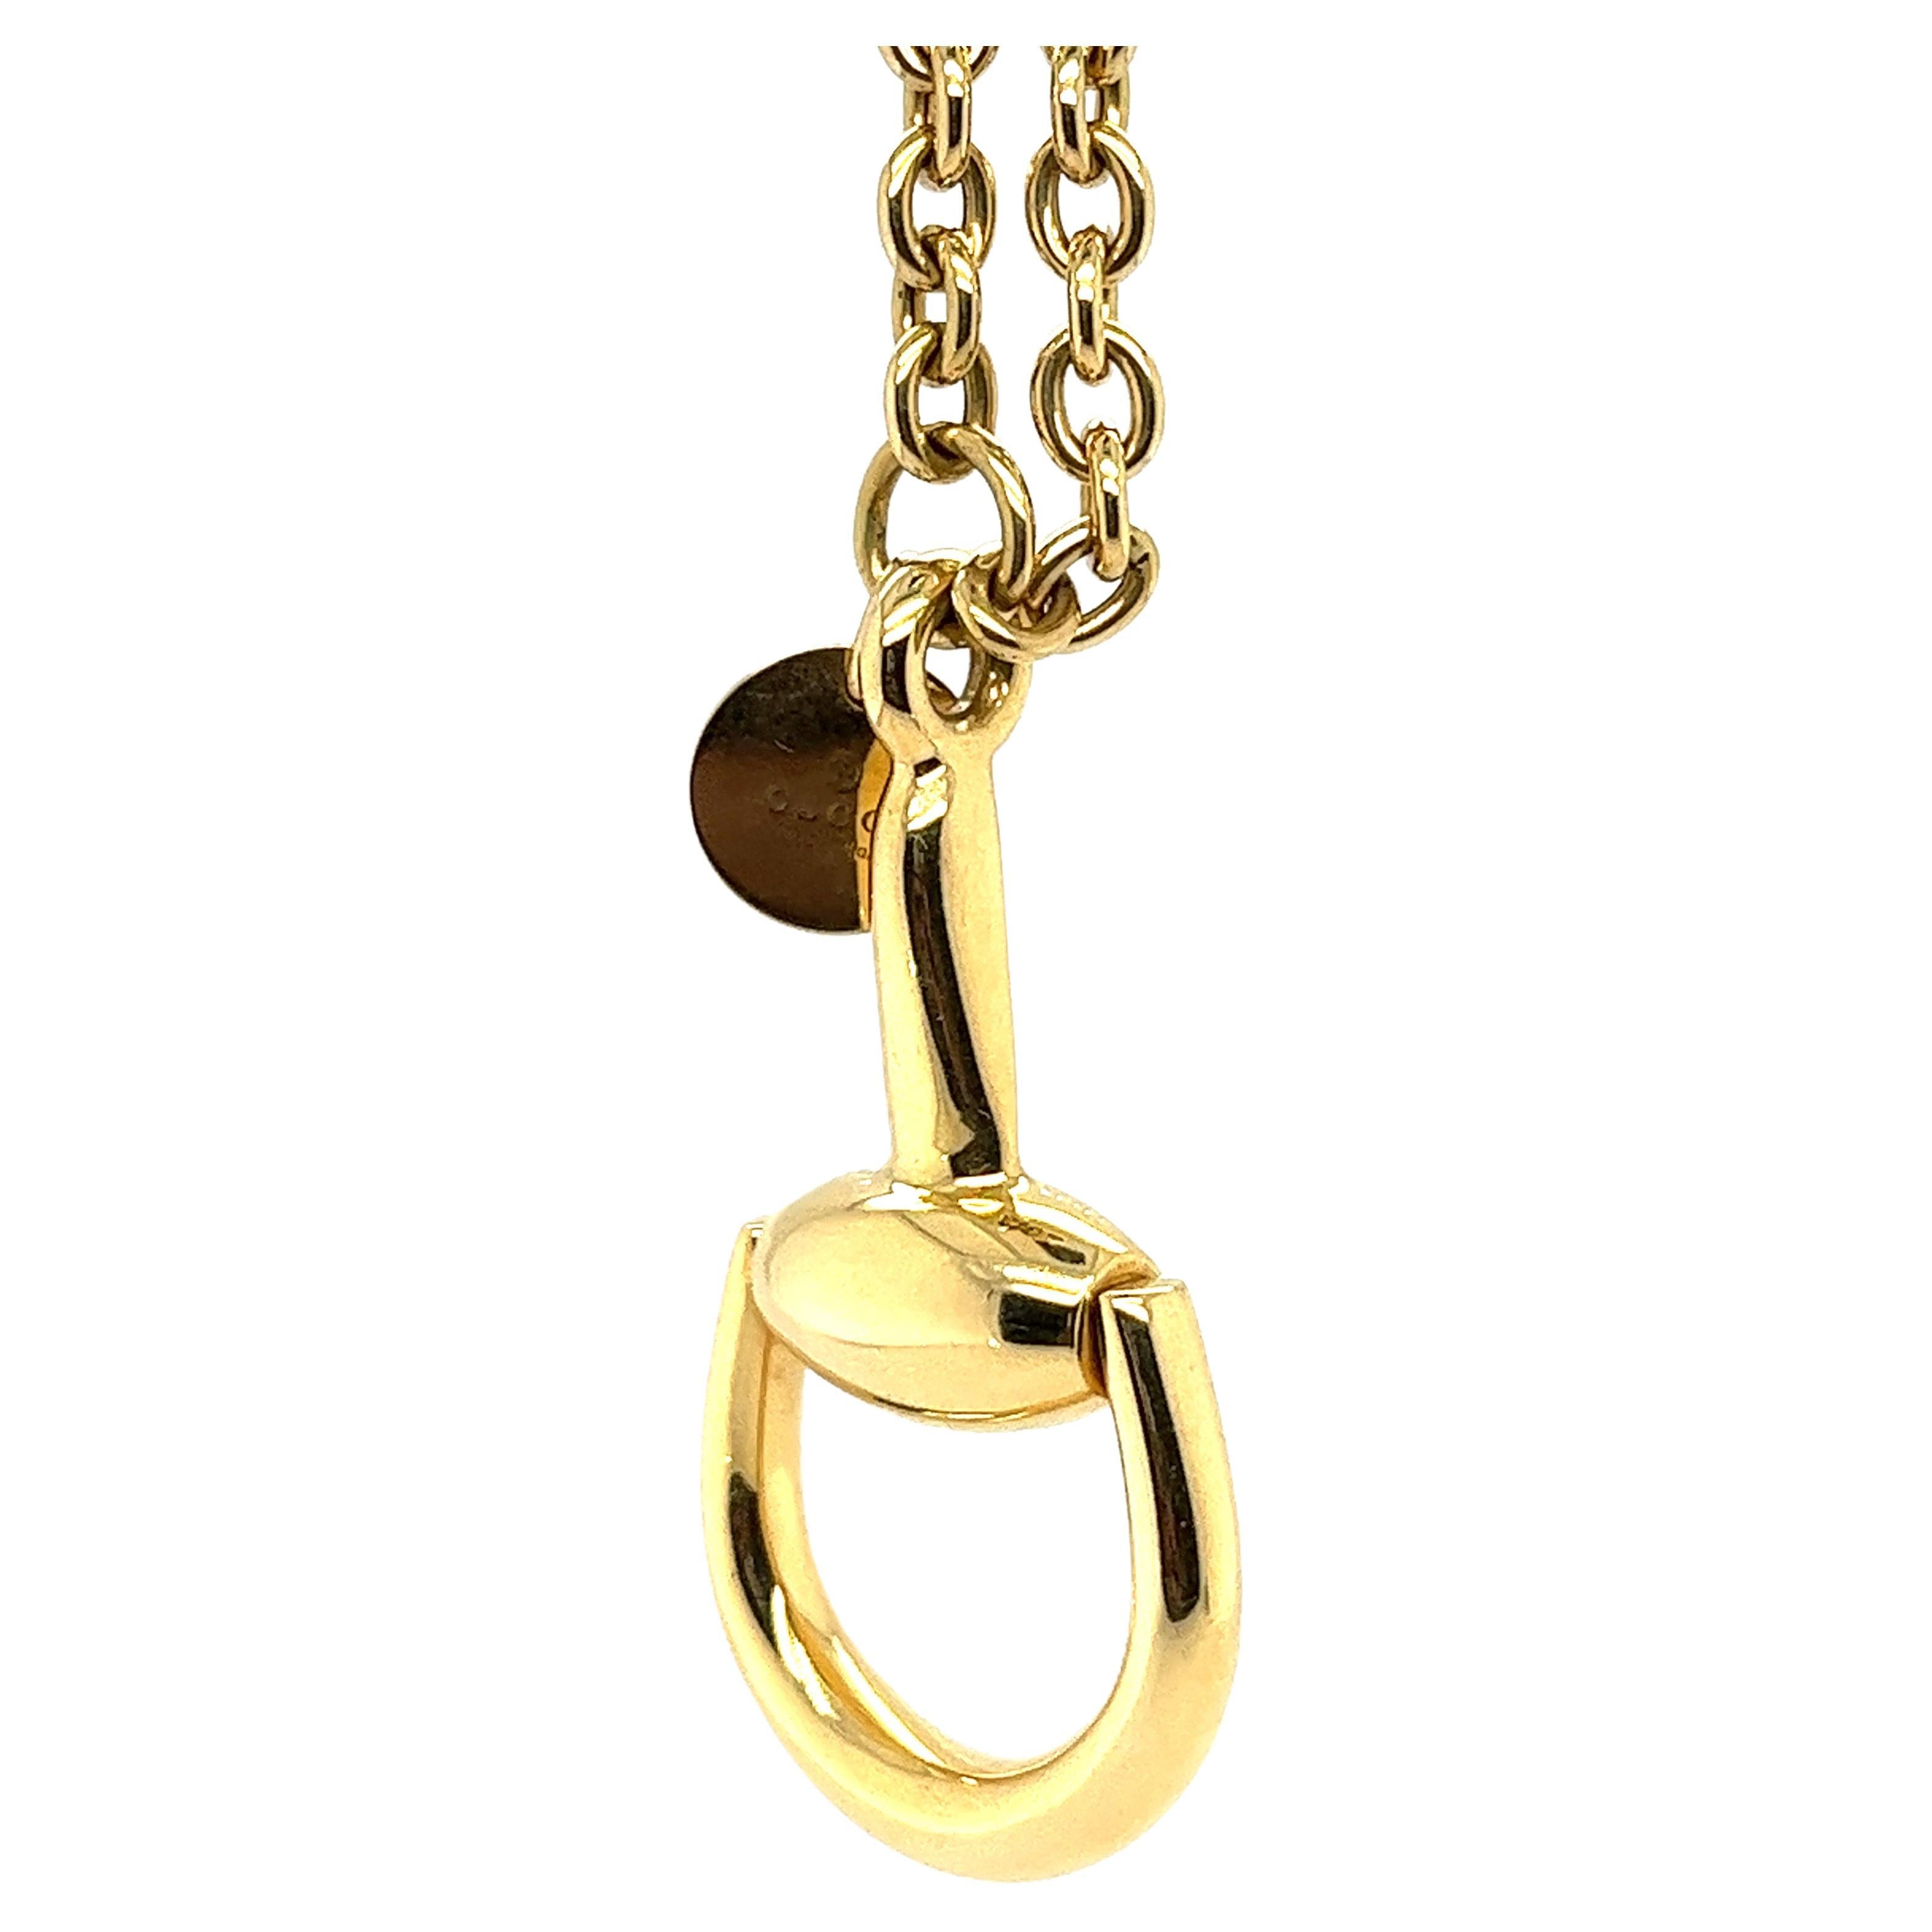 Gucci Horsebit Pendant 18k Gold Necklace